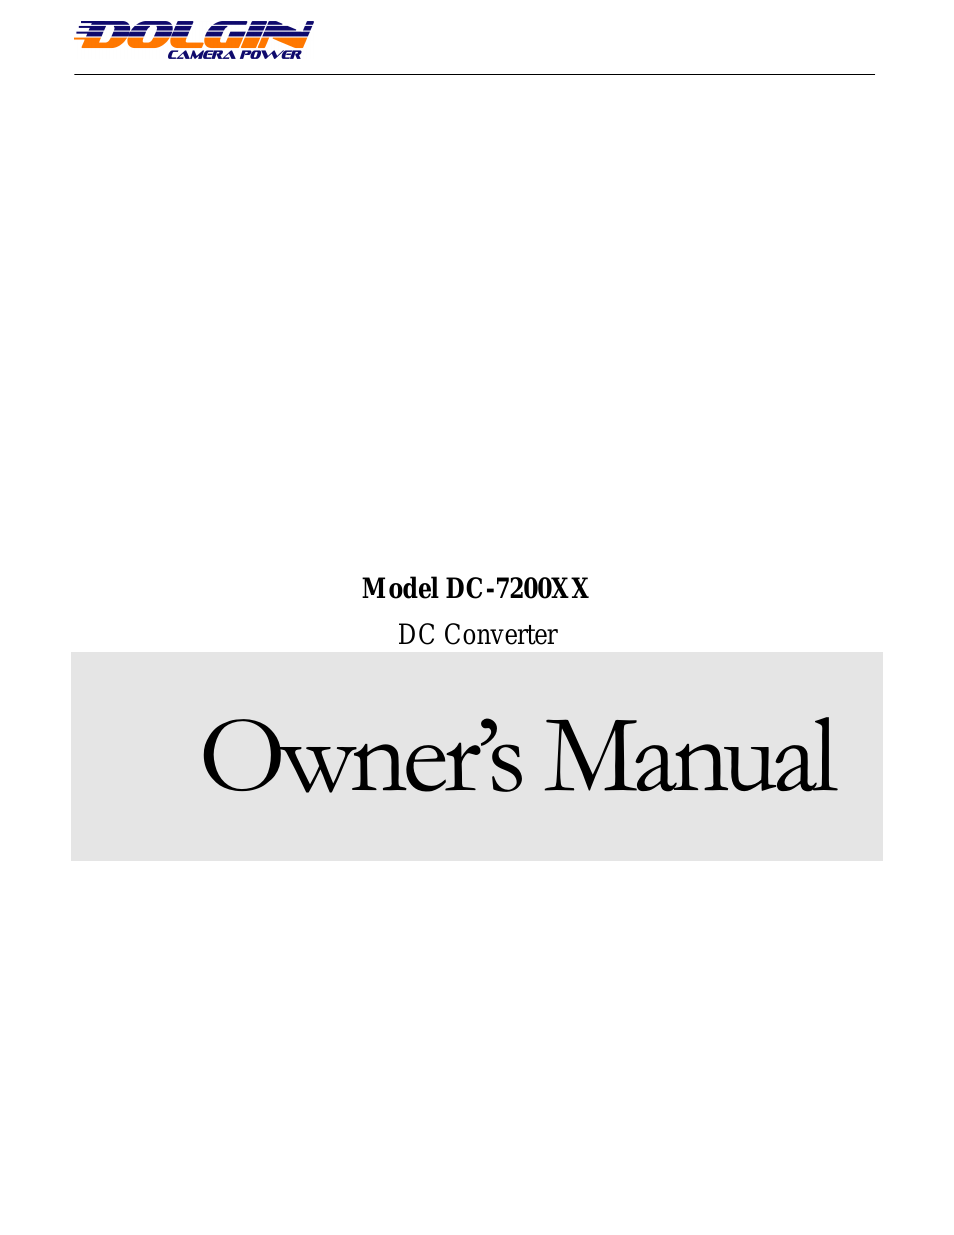 DC Converter manual